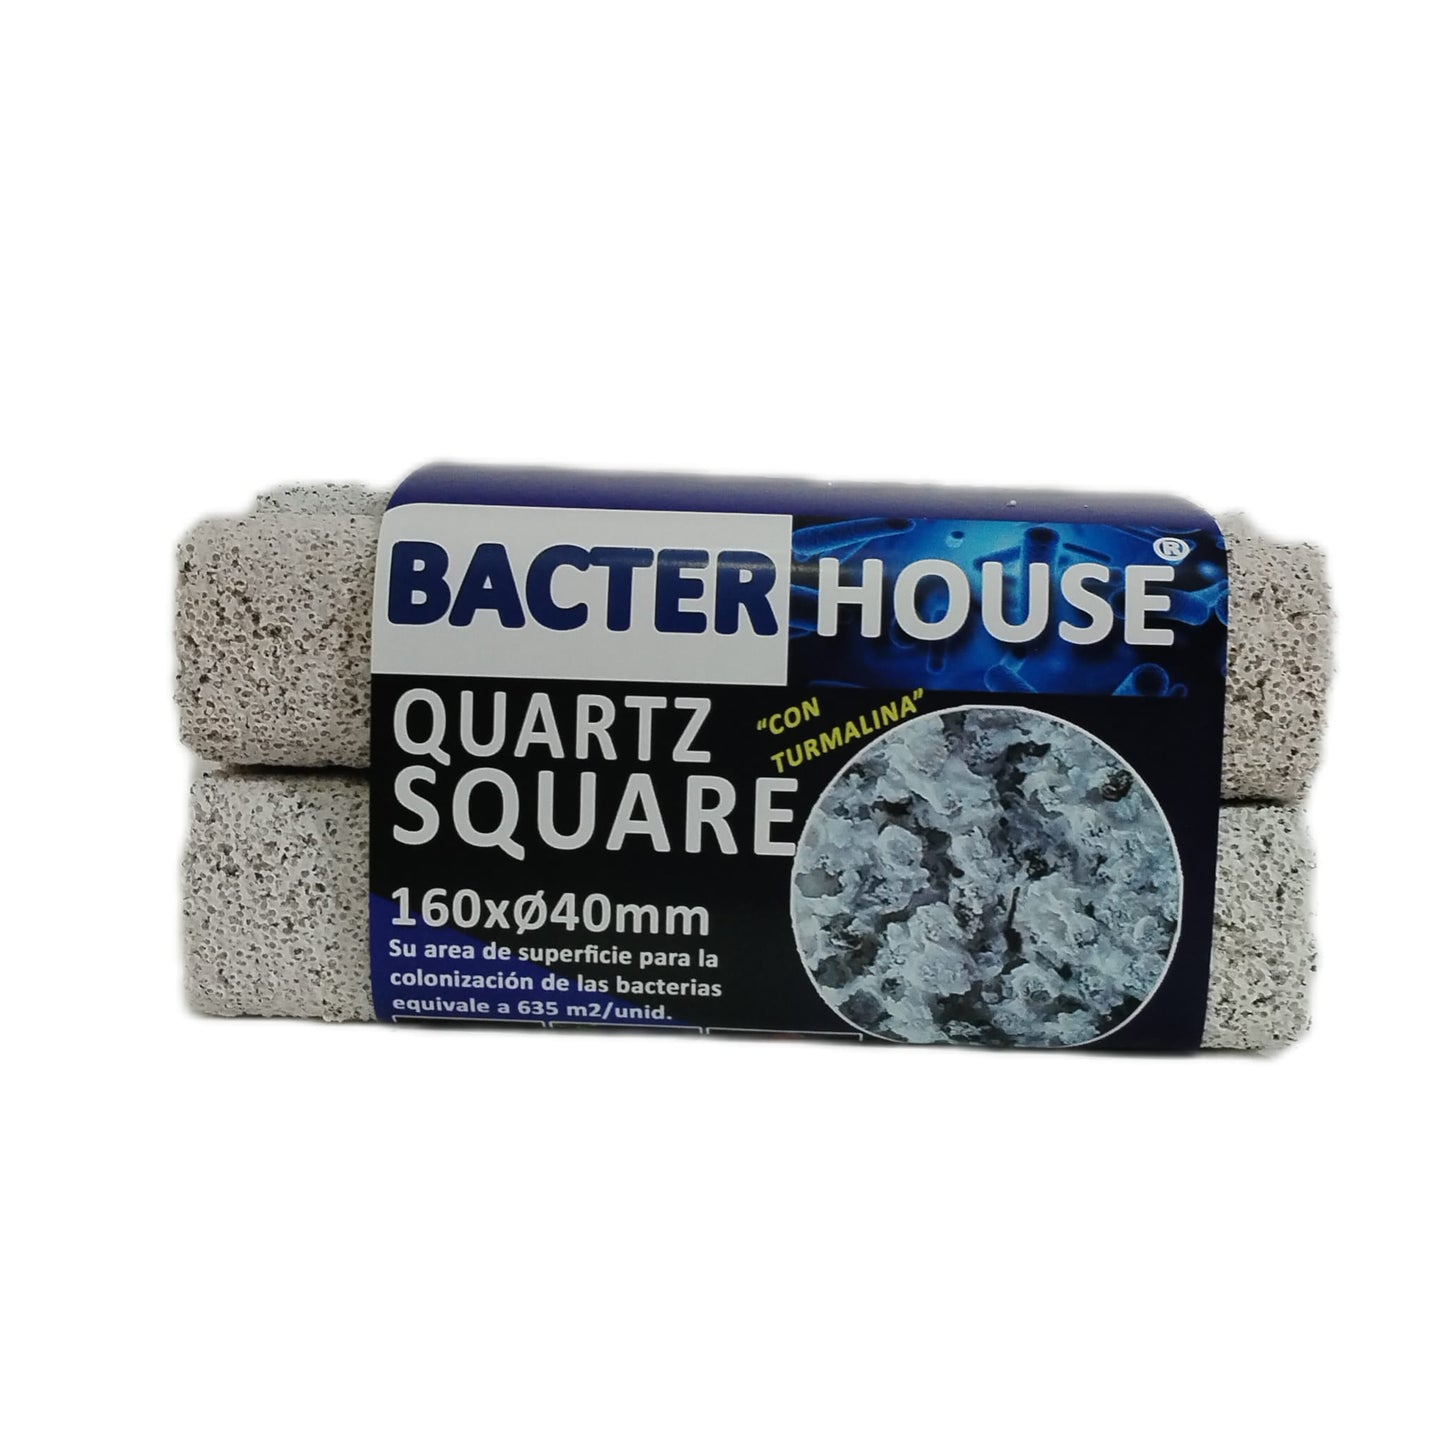 Bacterhouse Quartz Square 160x40mm with tourmaline 